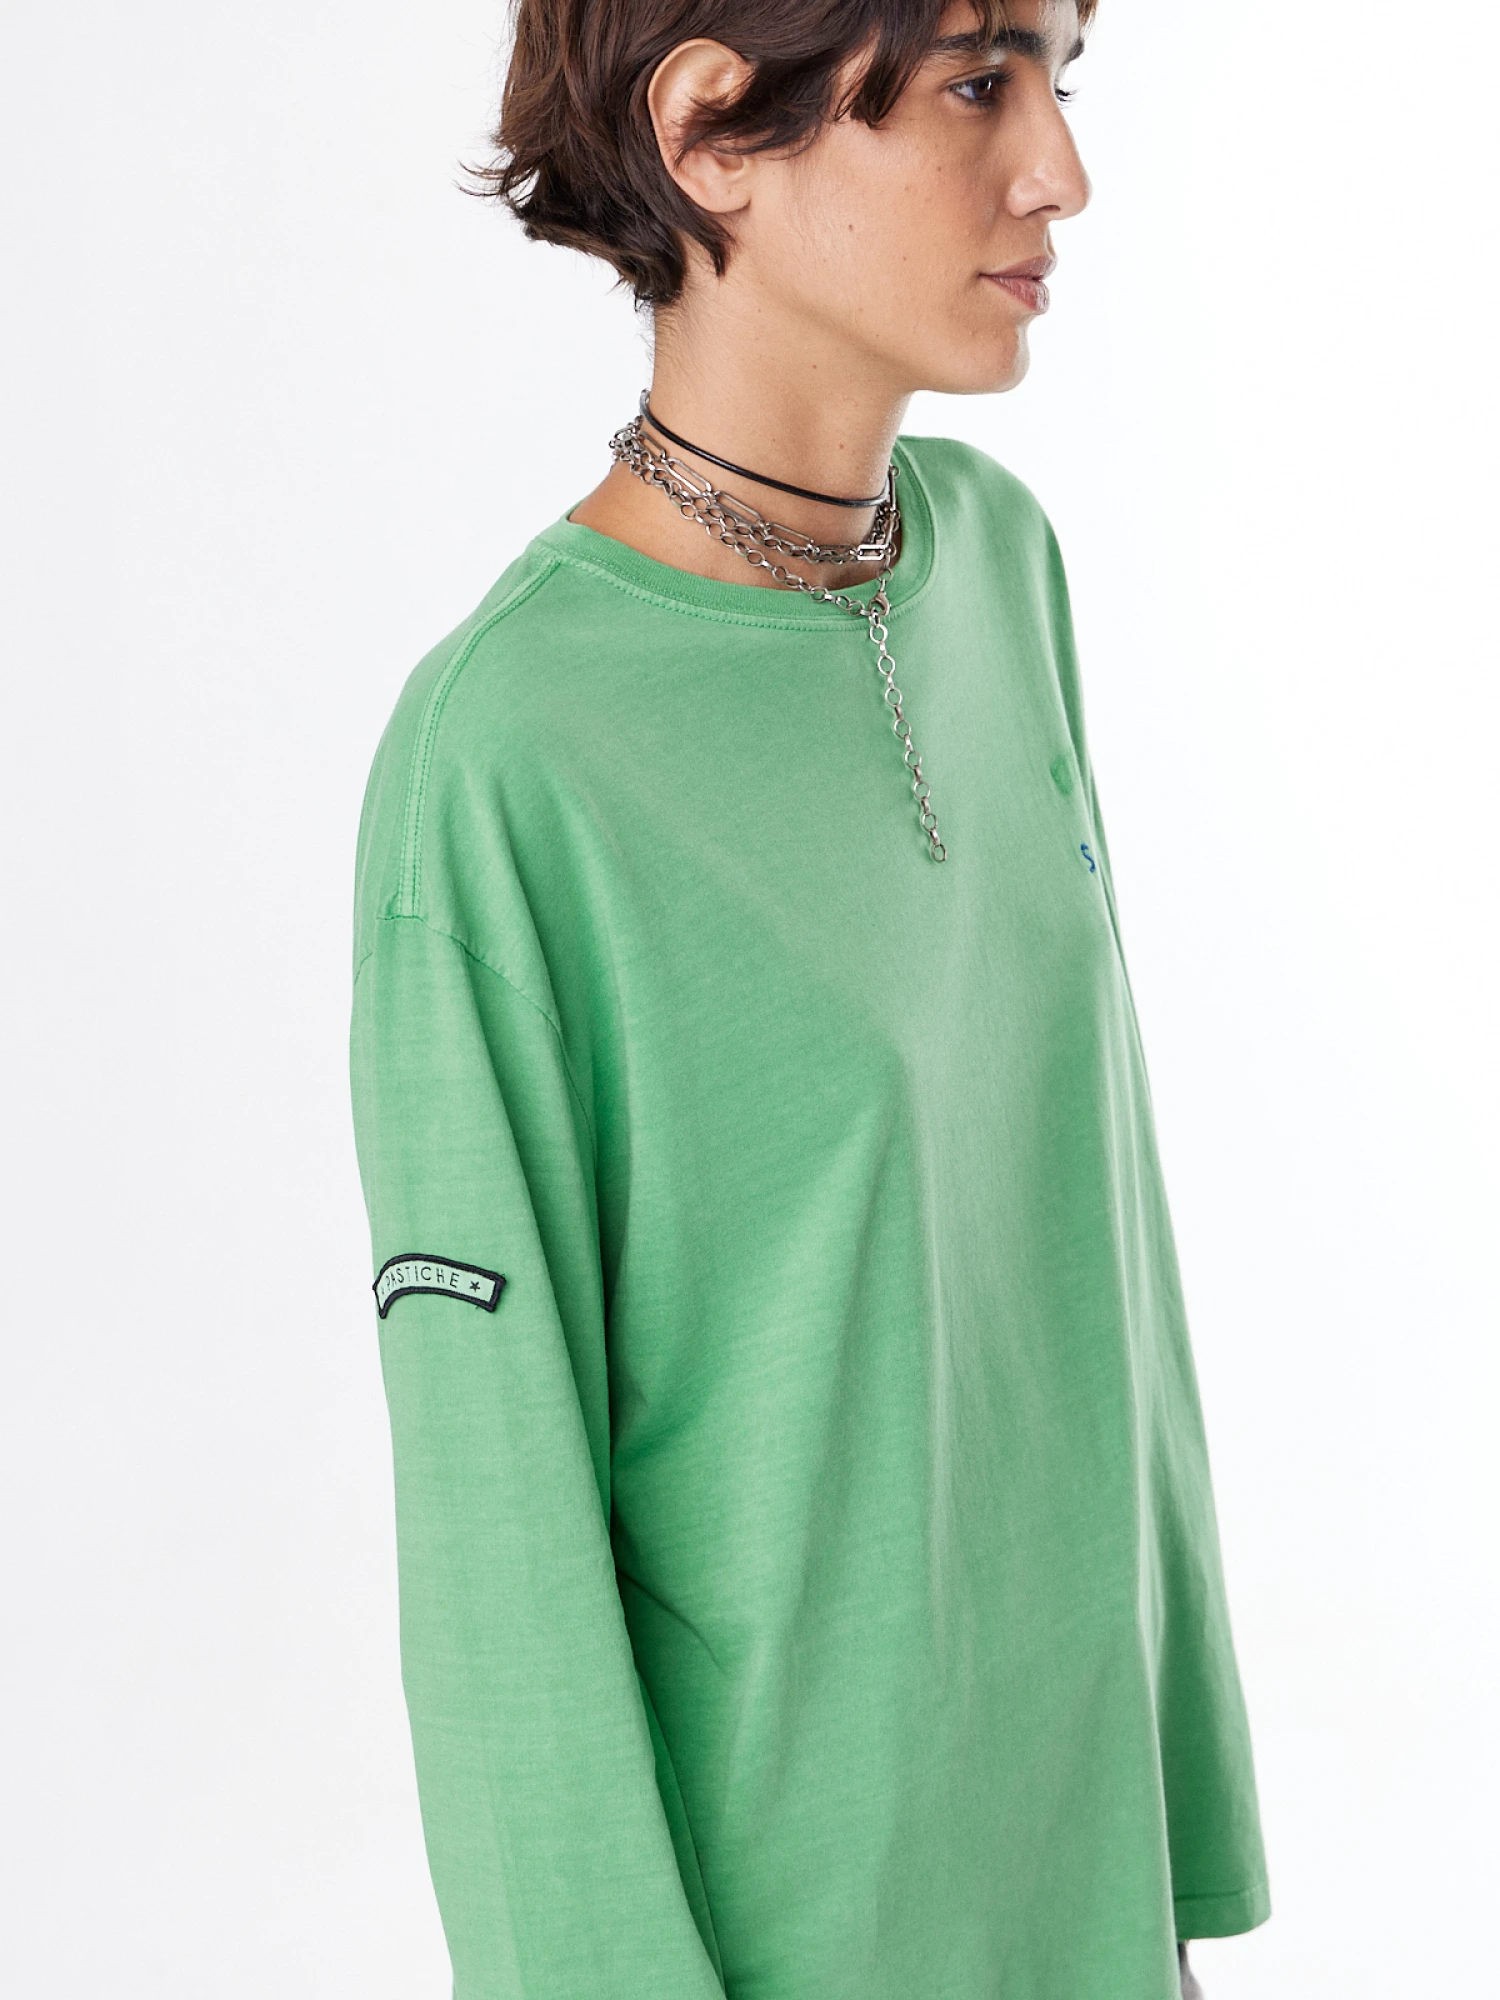 T-shirt Prince verde l